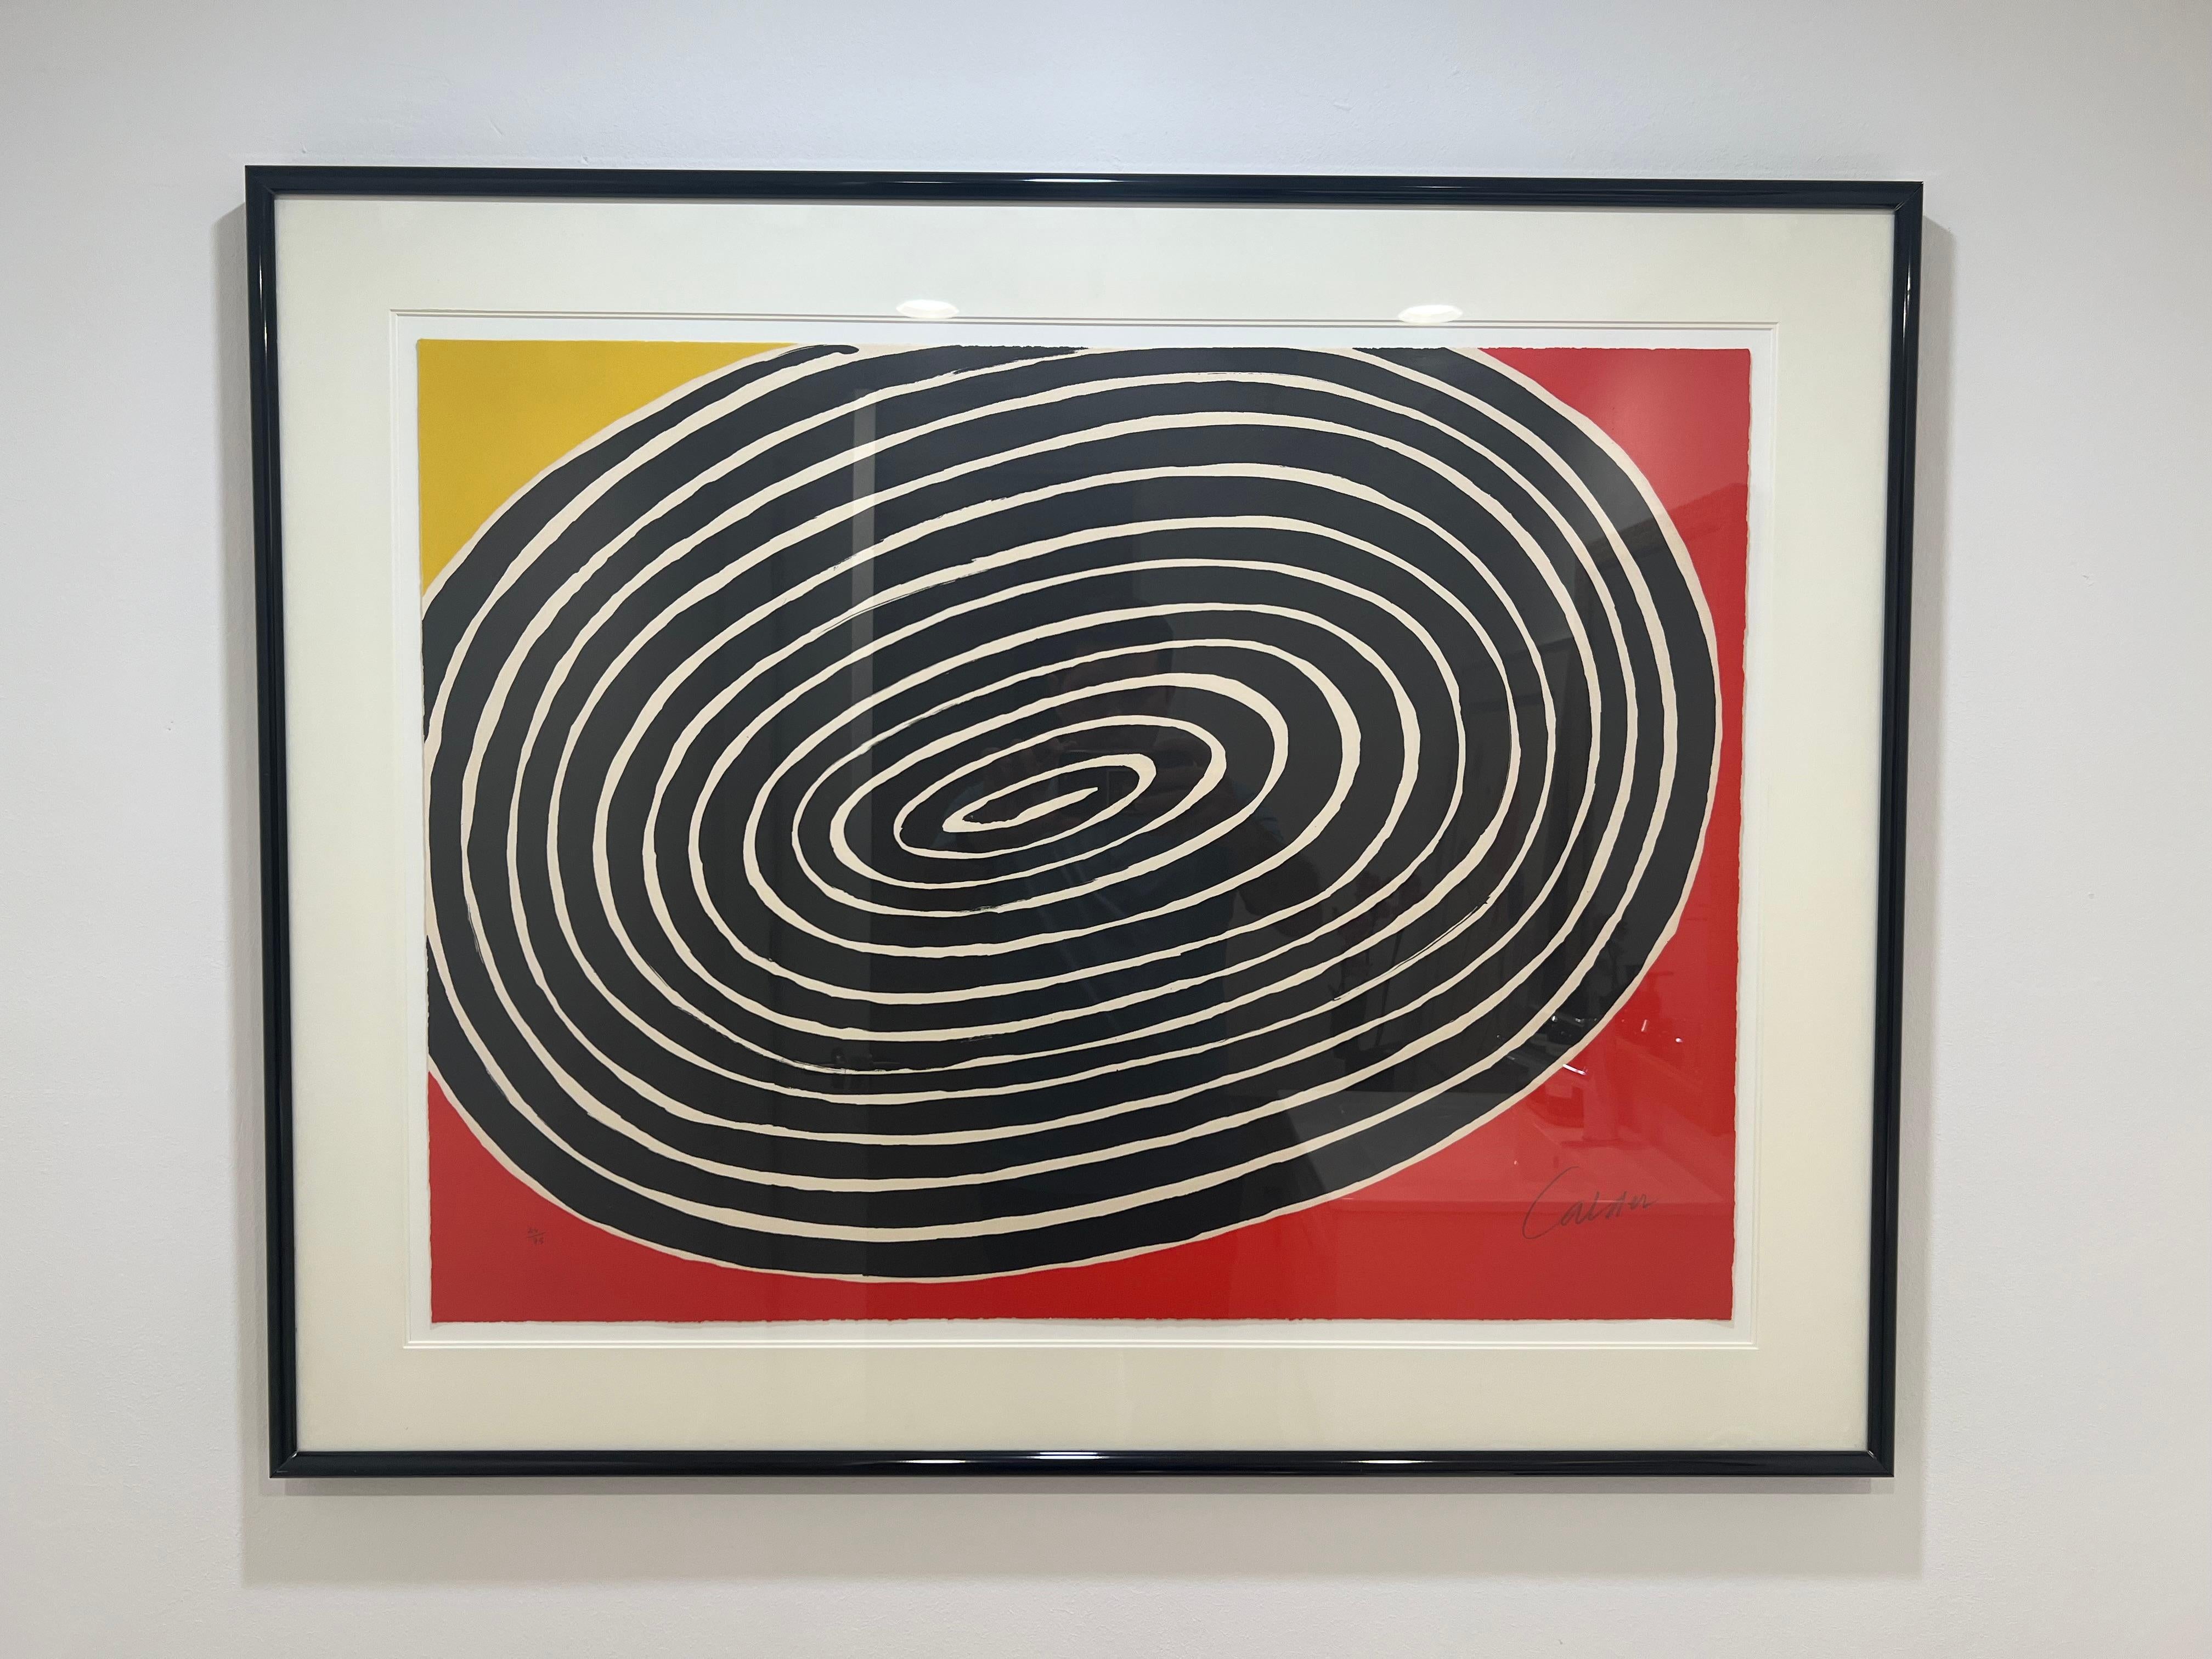 Petite Spirale - Print by Alexander Calder